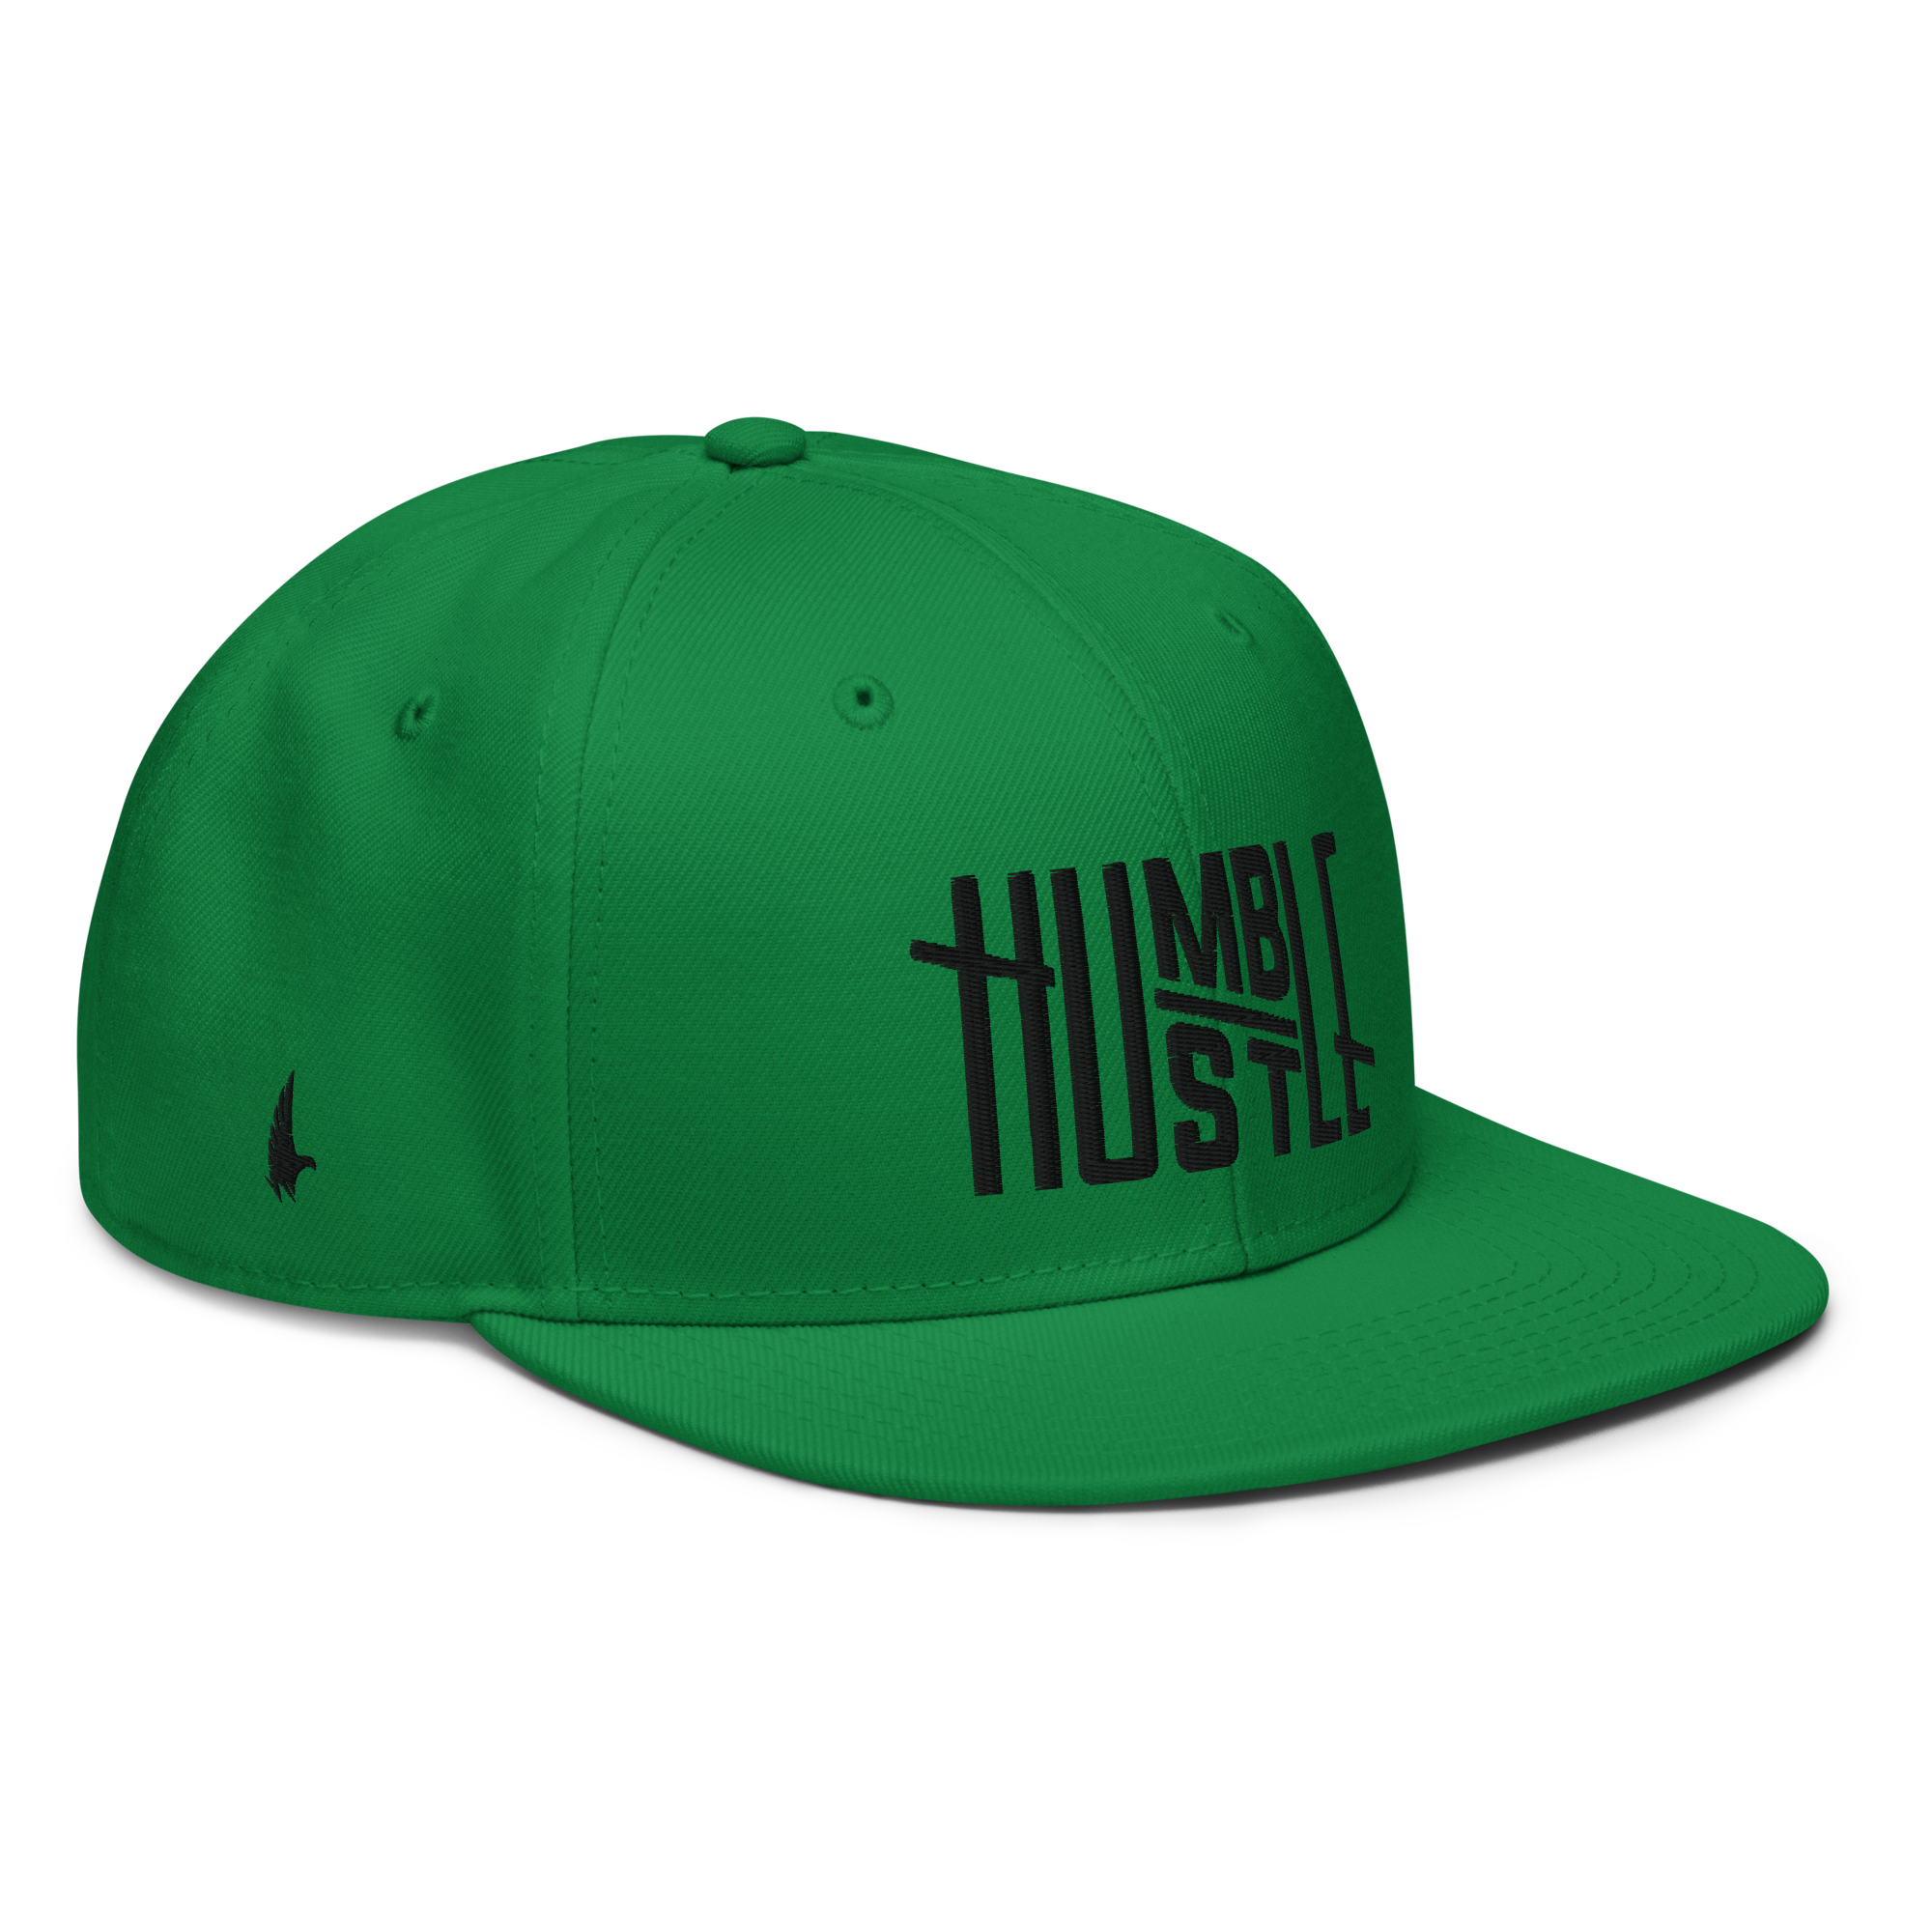 Humble Hustle Snapback Hat - Green/Black OS - Loyalty Vibes